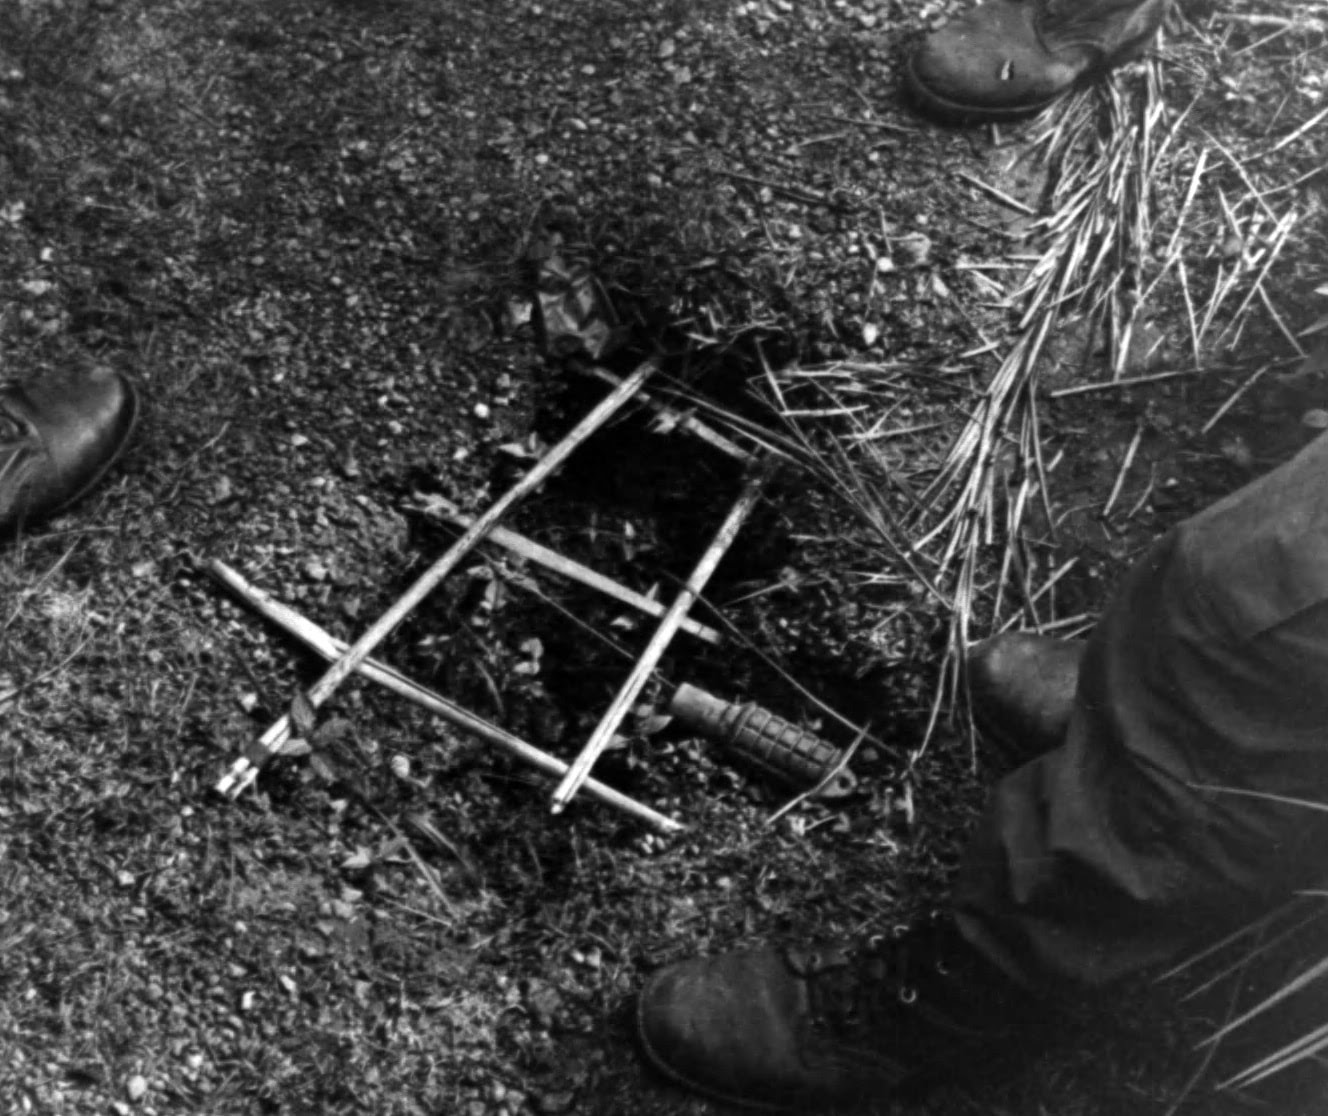 USMC training on Viet Cong traps